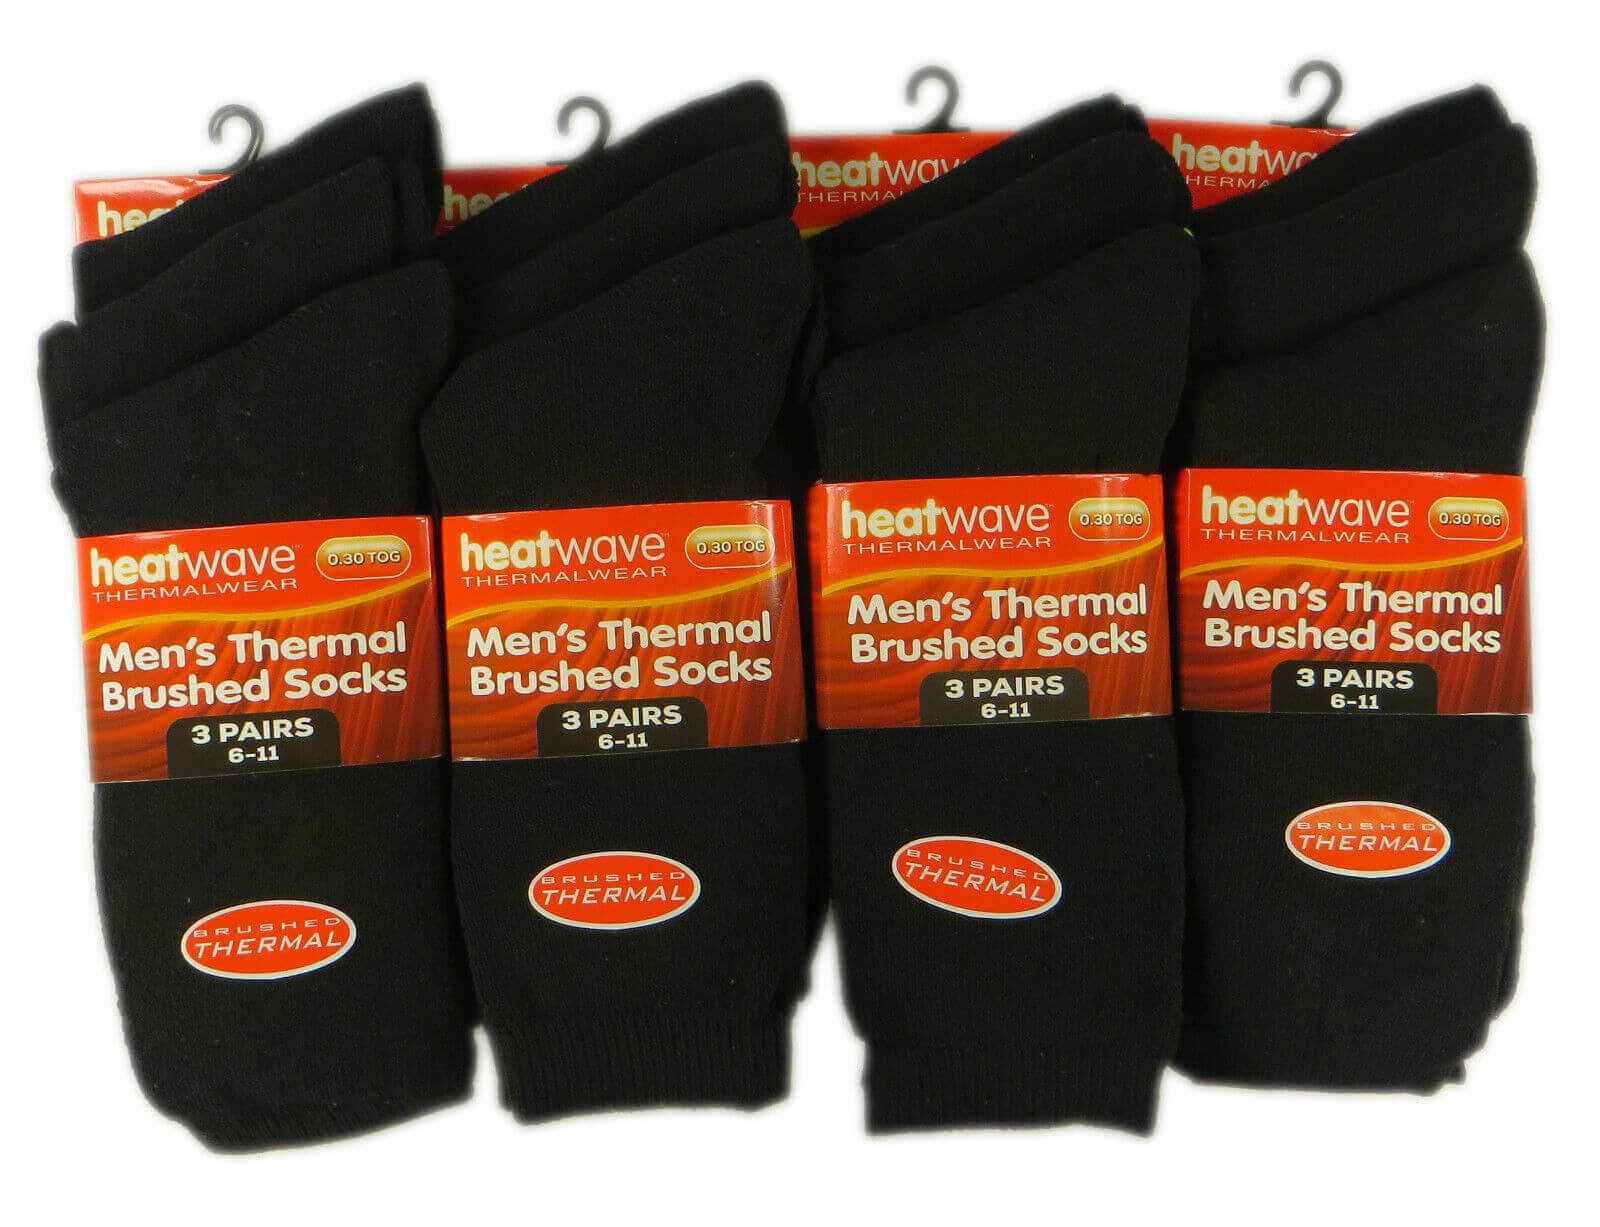 Heatwave® 12 Pairs Men's Black Thermal Socks, Warm Work Boot Socks. Buy now for £8.00. A Socks by Heatwave Thermalwear. 6-11, assorted, black, boot, boot socks, boys socks, breathable, clothing, comfortable, footwear, grey, heatwave, hiking, holidays, men